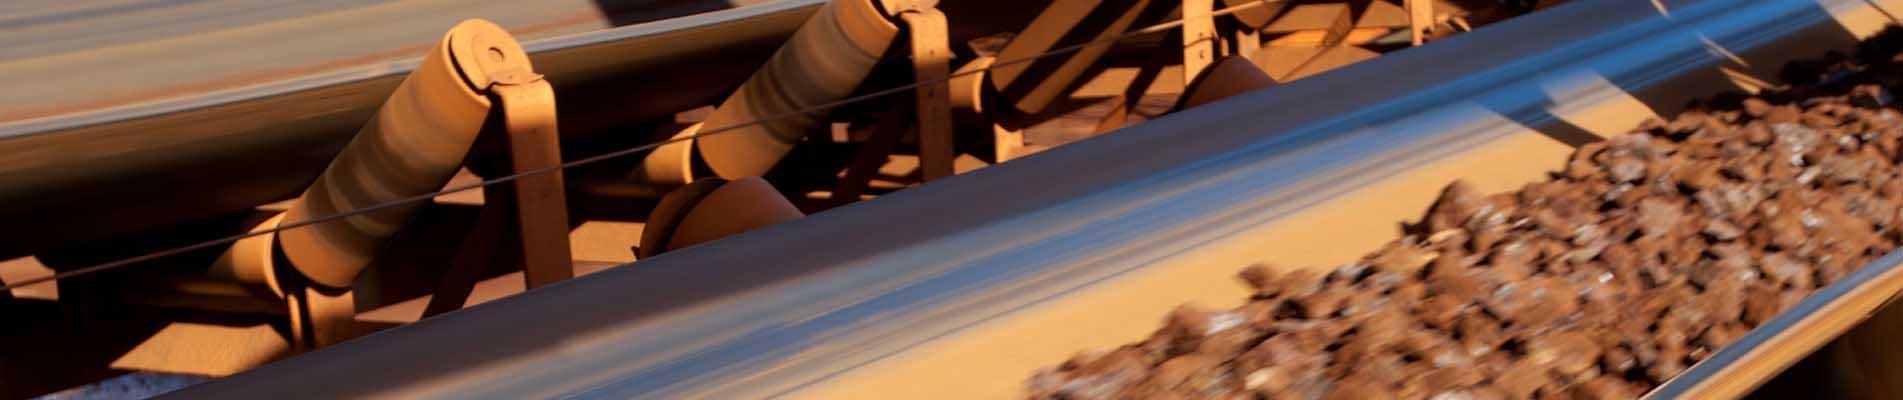 Fast curing repair materials for conveyor belts